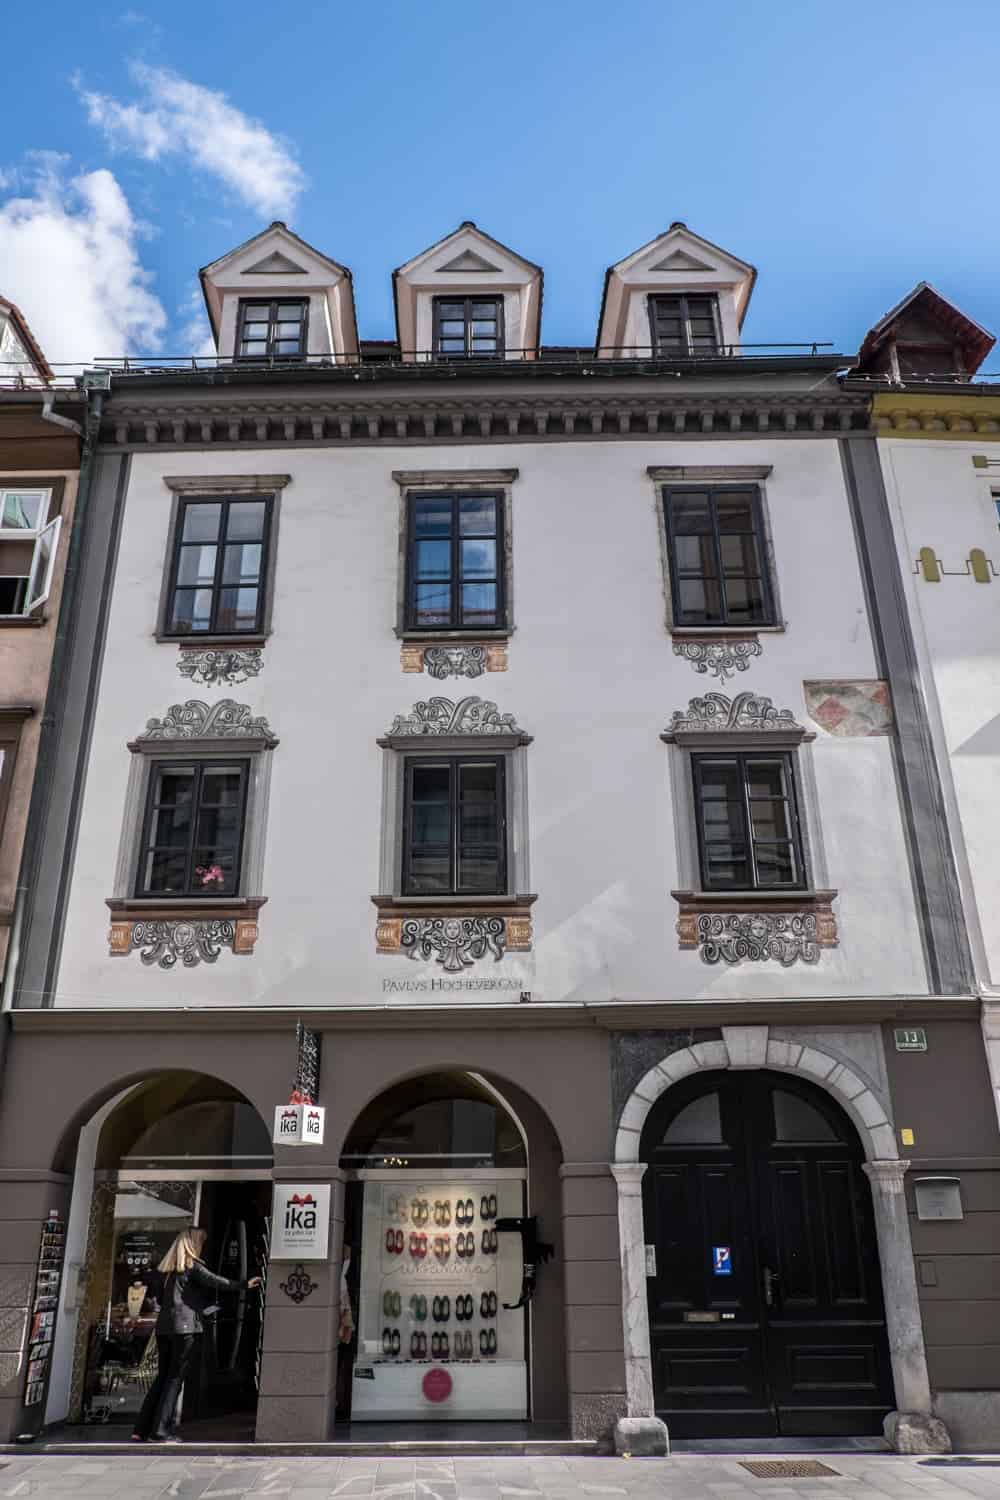 Renaissance era and Baroque buildings in Ljubljana Old Town, Slovenia